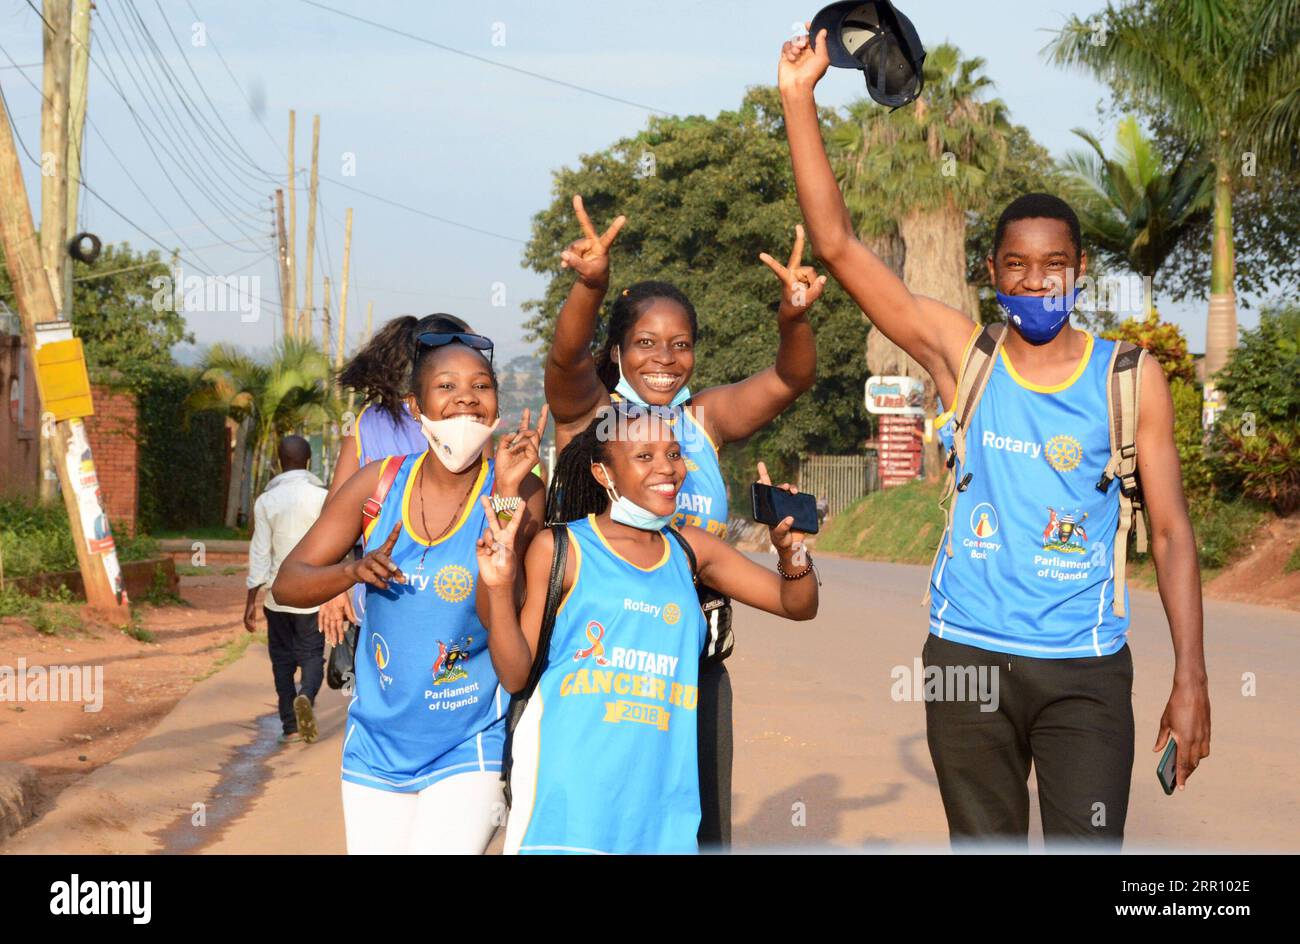 200830 -- KAMPALA, Aug. 30, 2020 -- Runners celebrate during the 2020 Virtual Rotary Cancer Marathon Run in Kampala, capital of Uganda, Aug. 30, 2020. The 2020 Rotary Cancer Marathon Run was held virtually due to COVID-19 pandemic.  UGANDA-KAMPALA-COVID-19-2020 VIRTUAL ROTARY CANCER RUN NicholasxKajoba PUBLICATIONxNOTxINxCHN Stock Photo